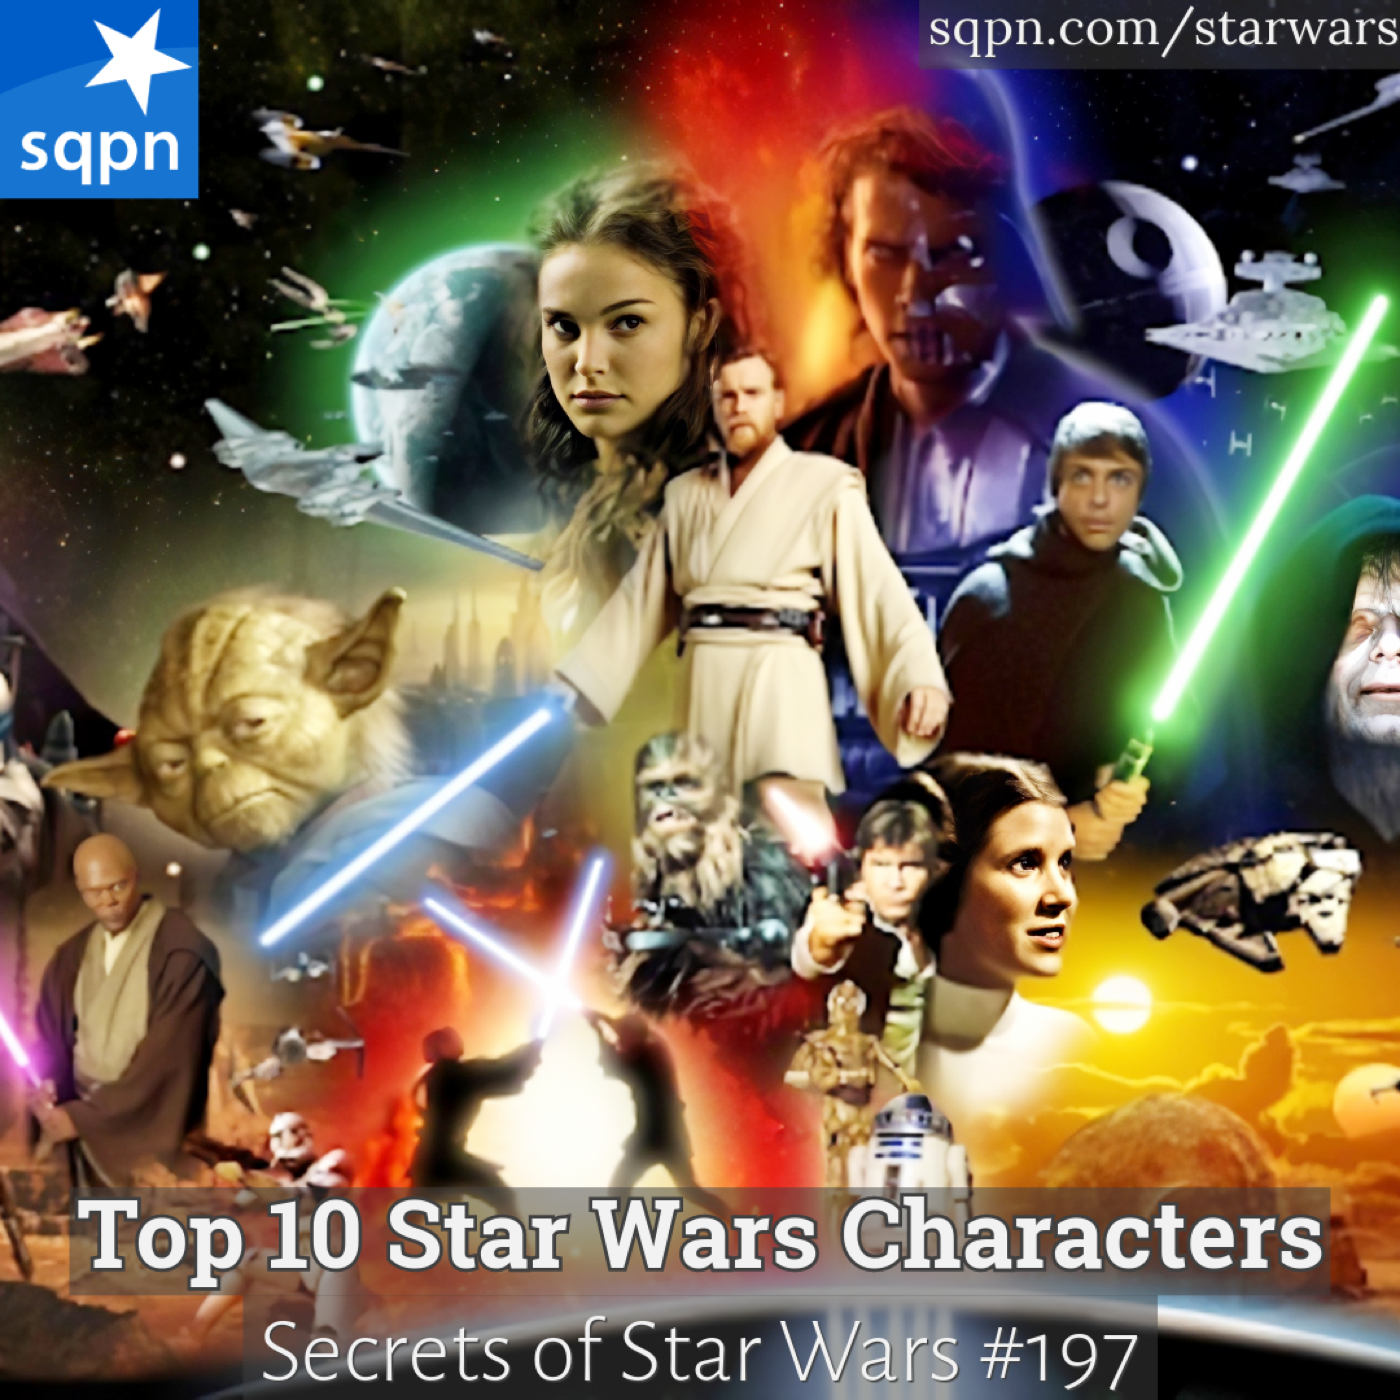 The Top Ten Star Wars Characters